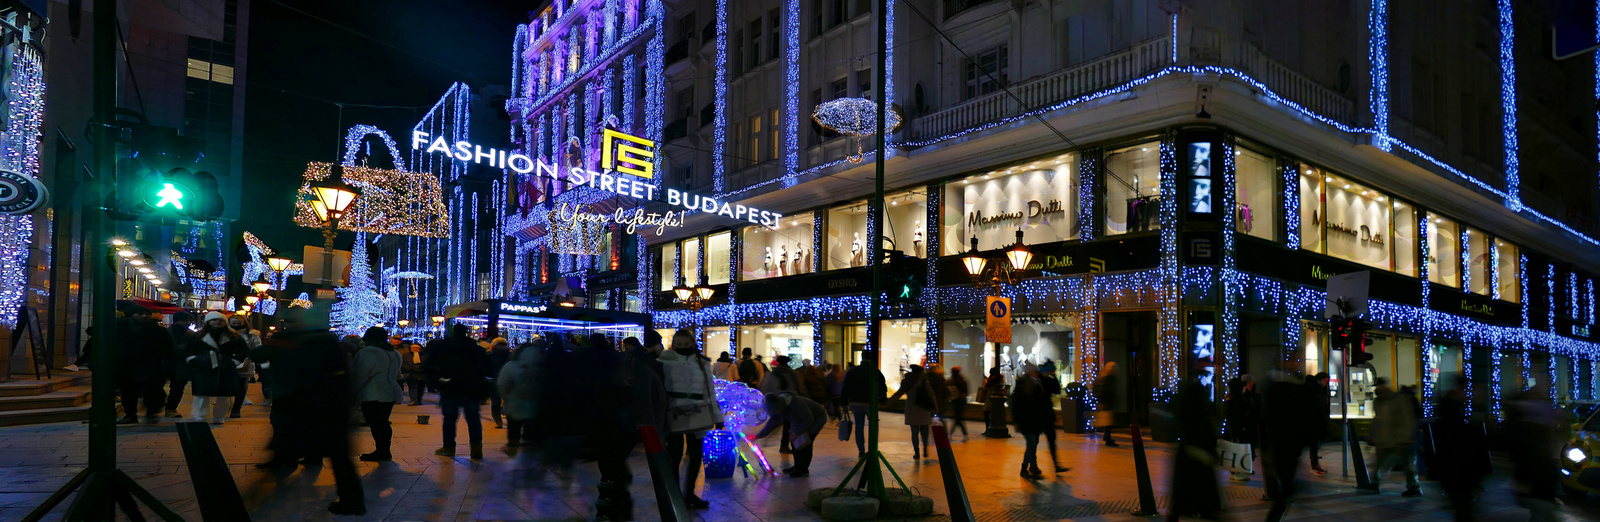 Fashion street Budapest 2021 karácsony